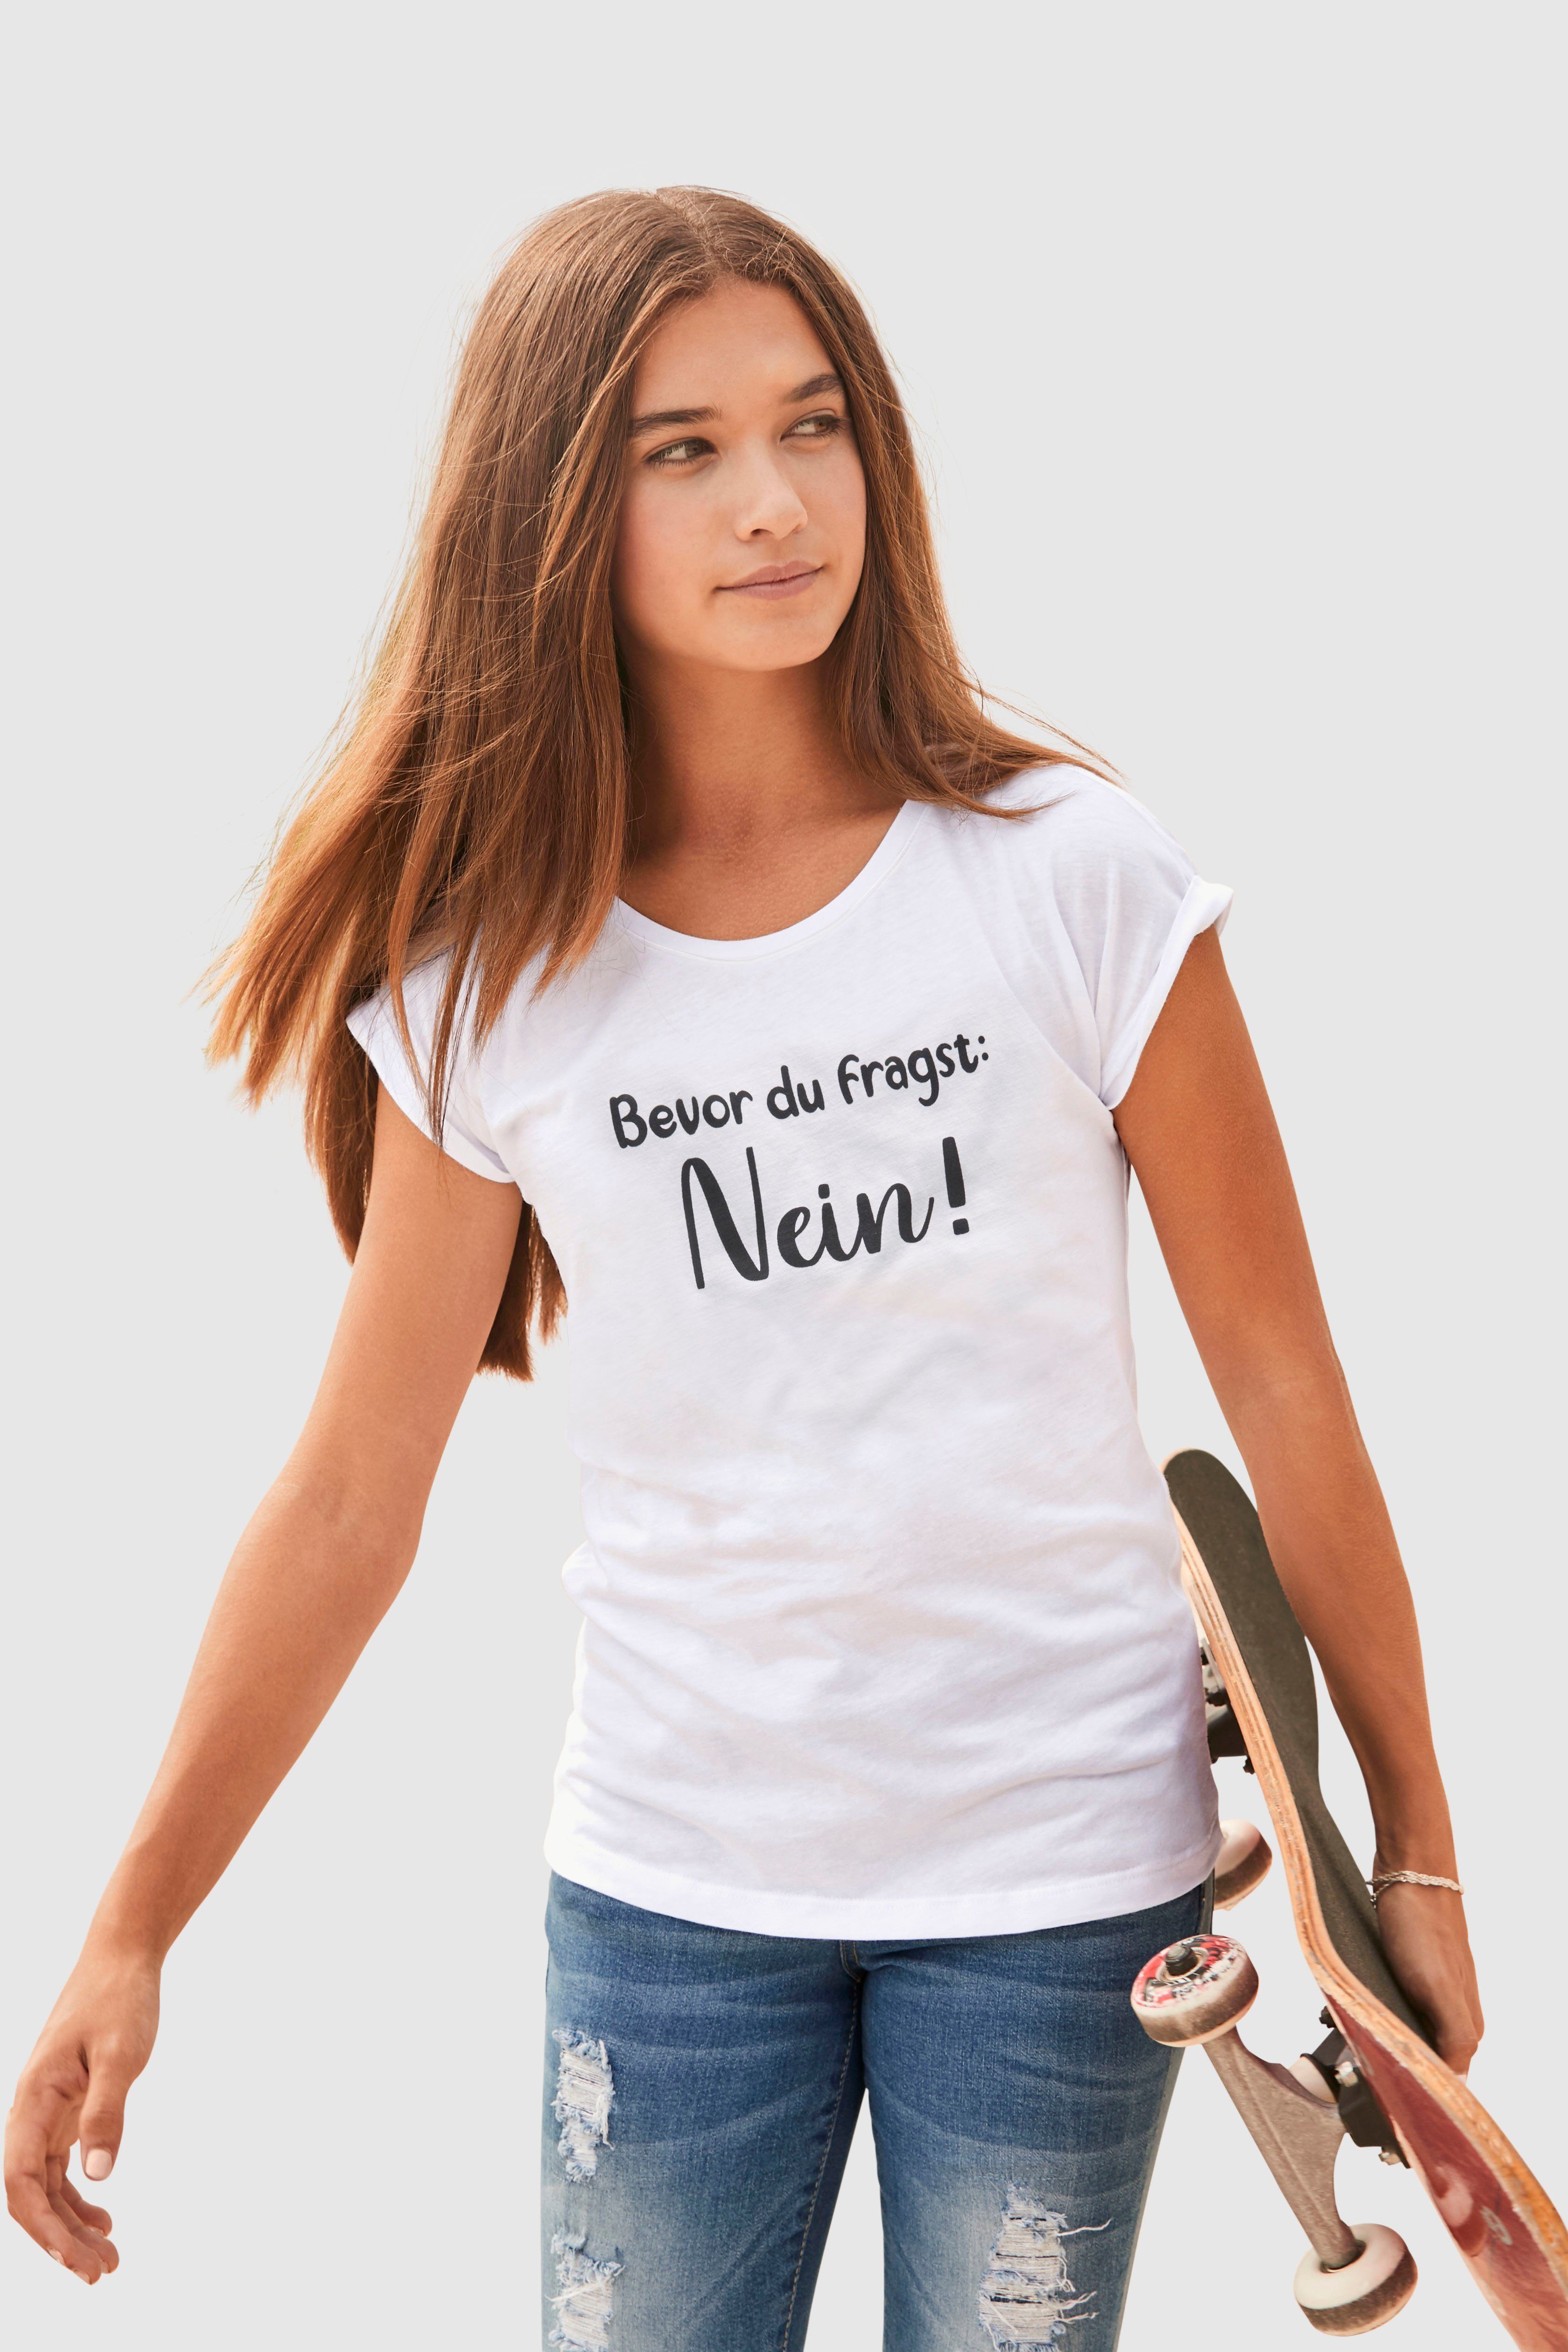 KIDSWORLD T-Shirt in Du legerer fragst: Form Bevor NEIN! weiter